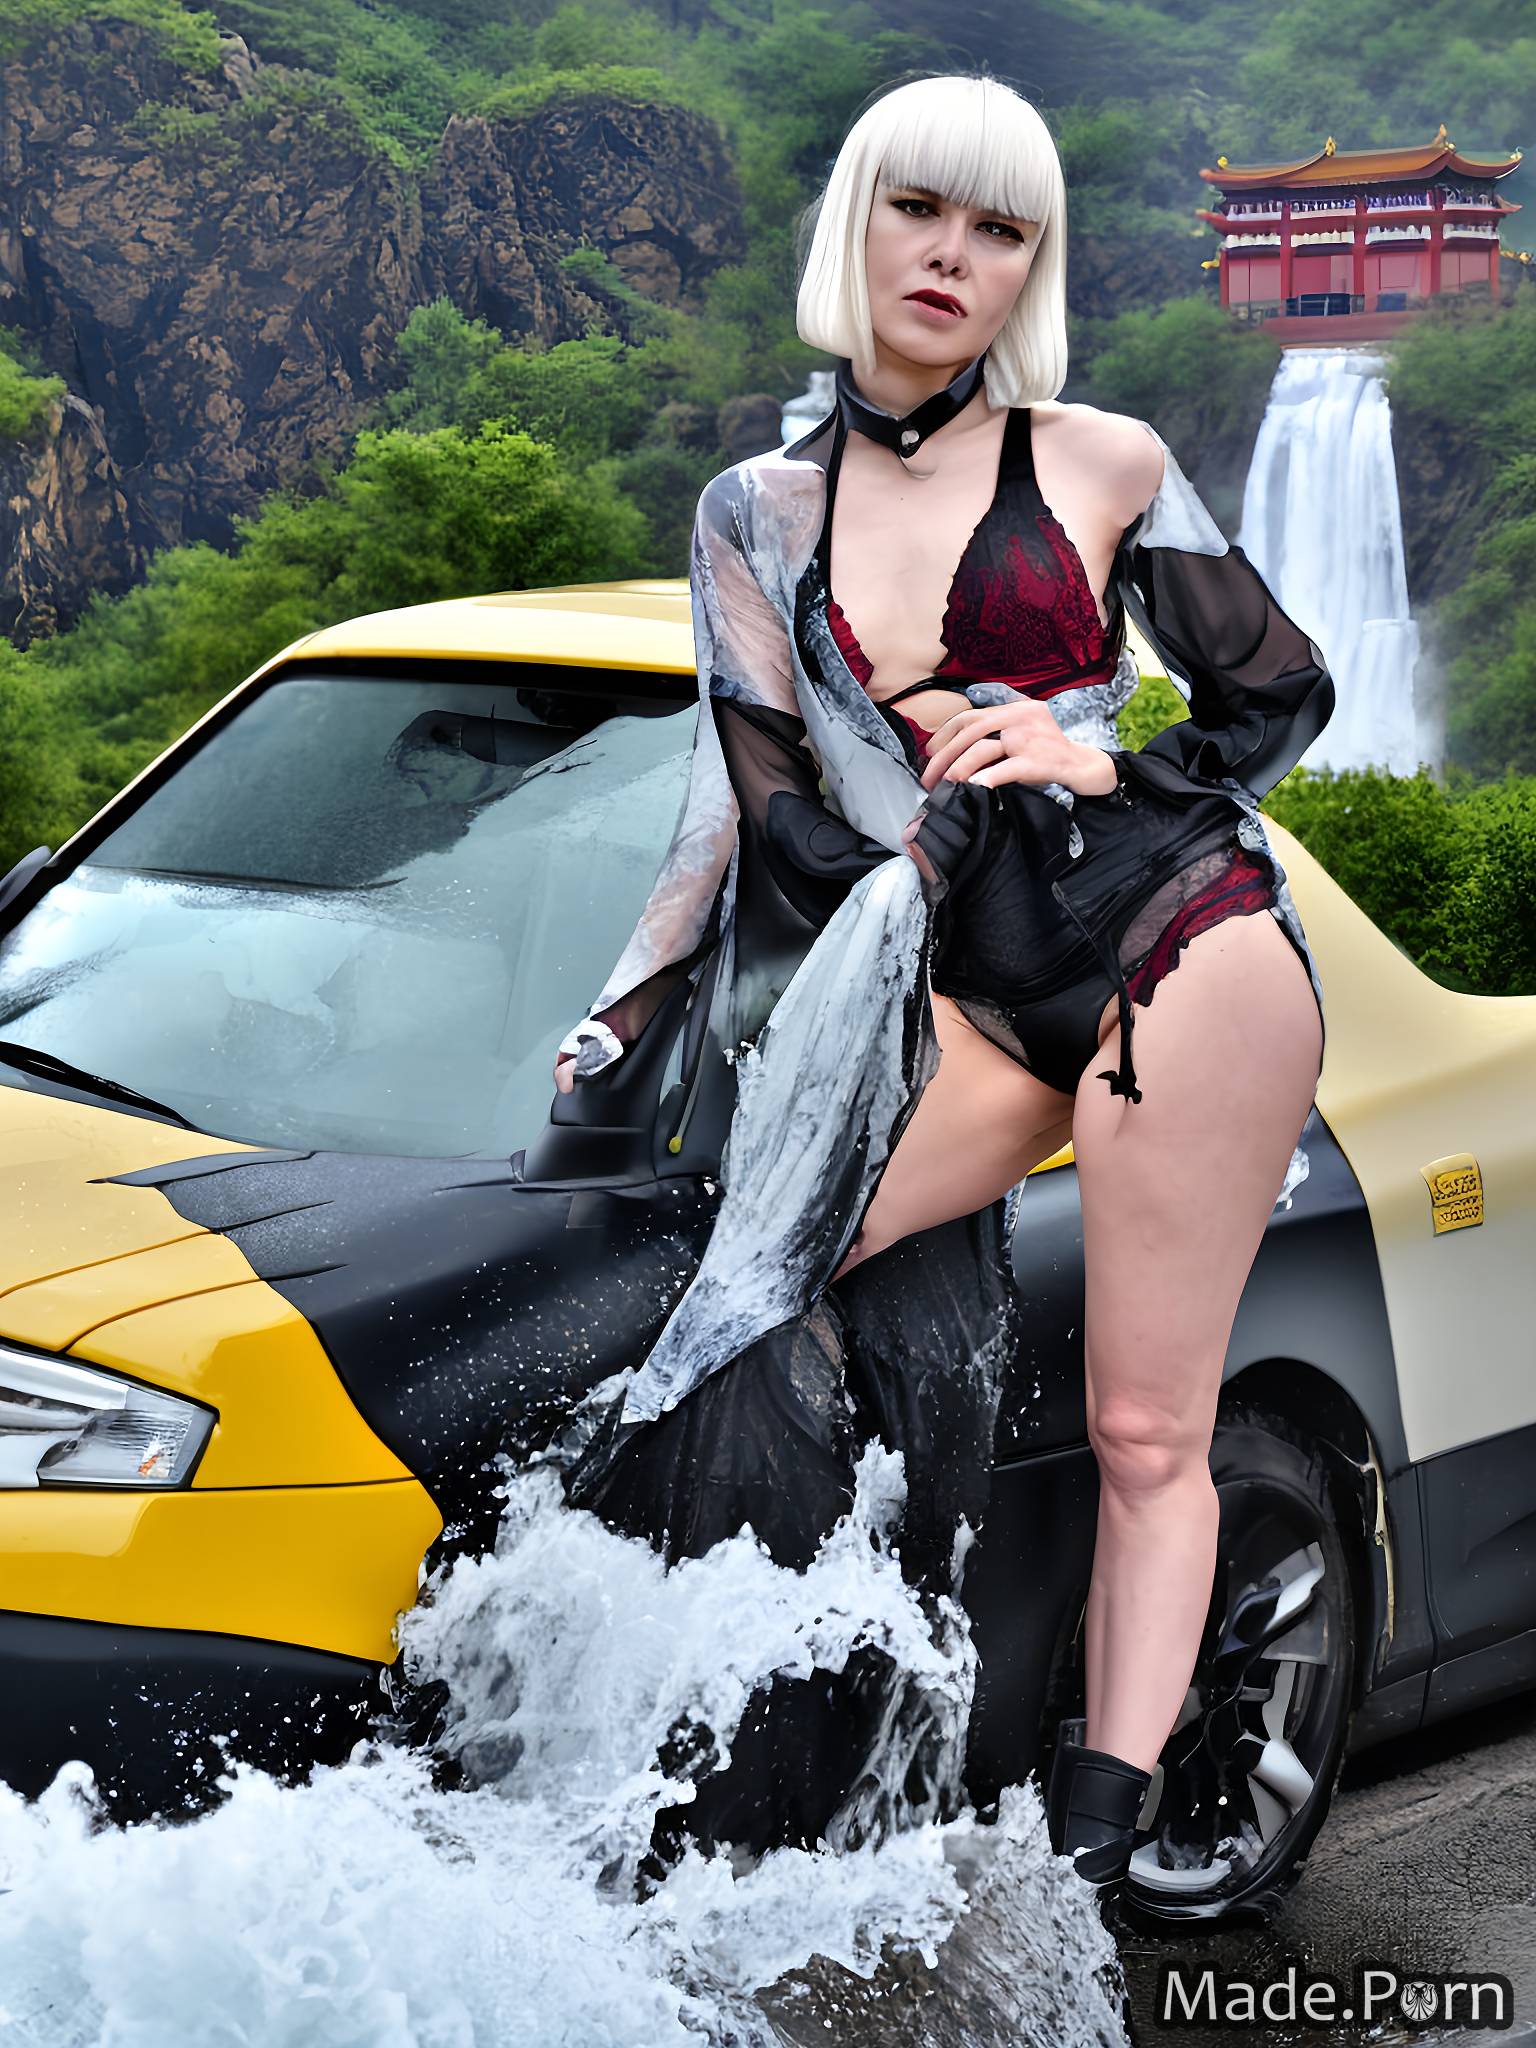 Great Wall of China paper waterfall yellow washing car thighs ball gag